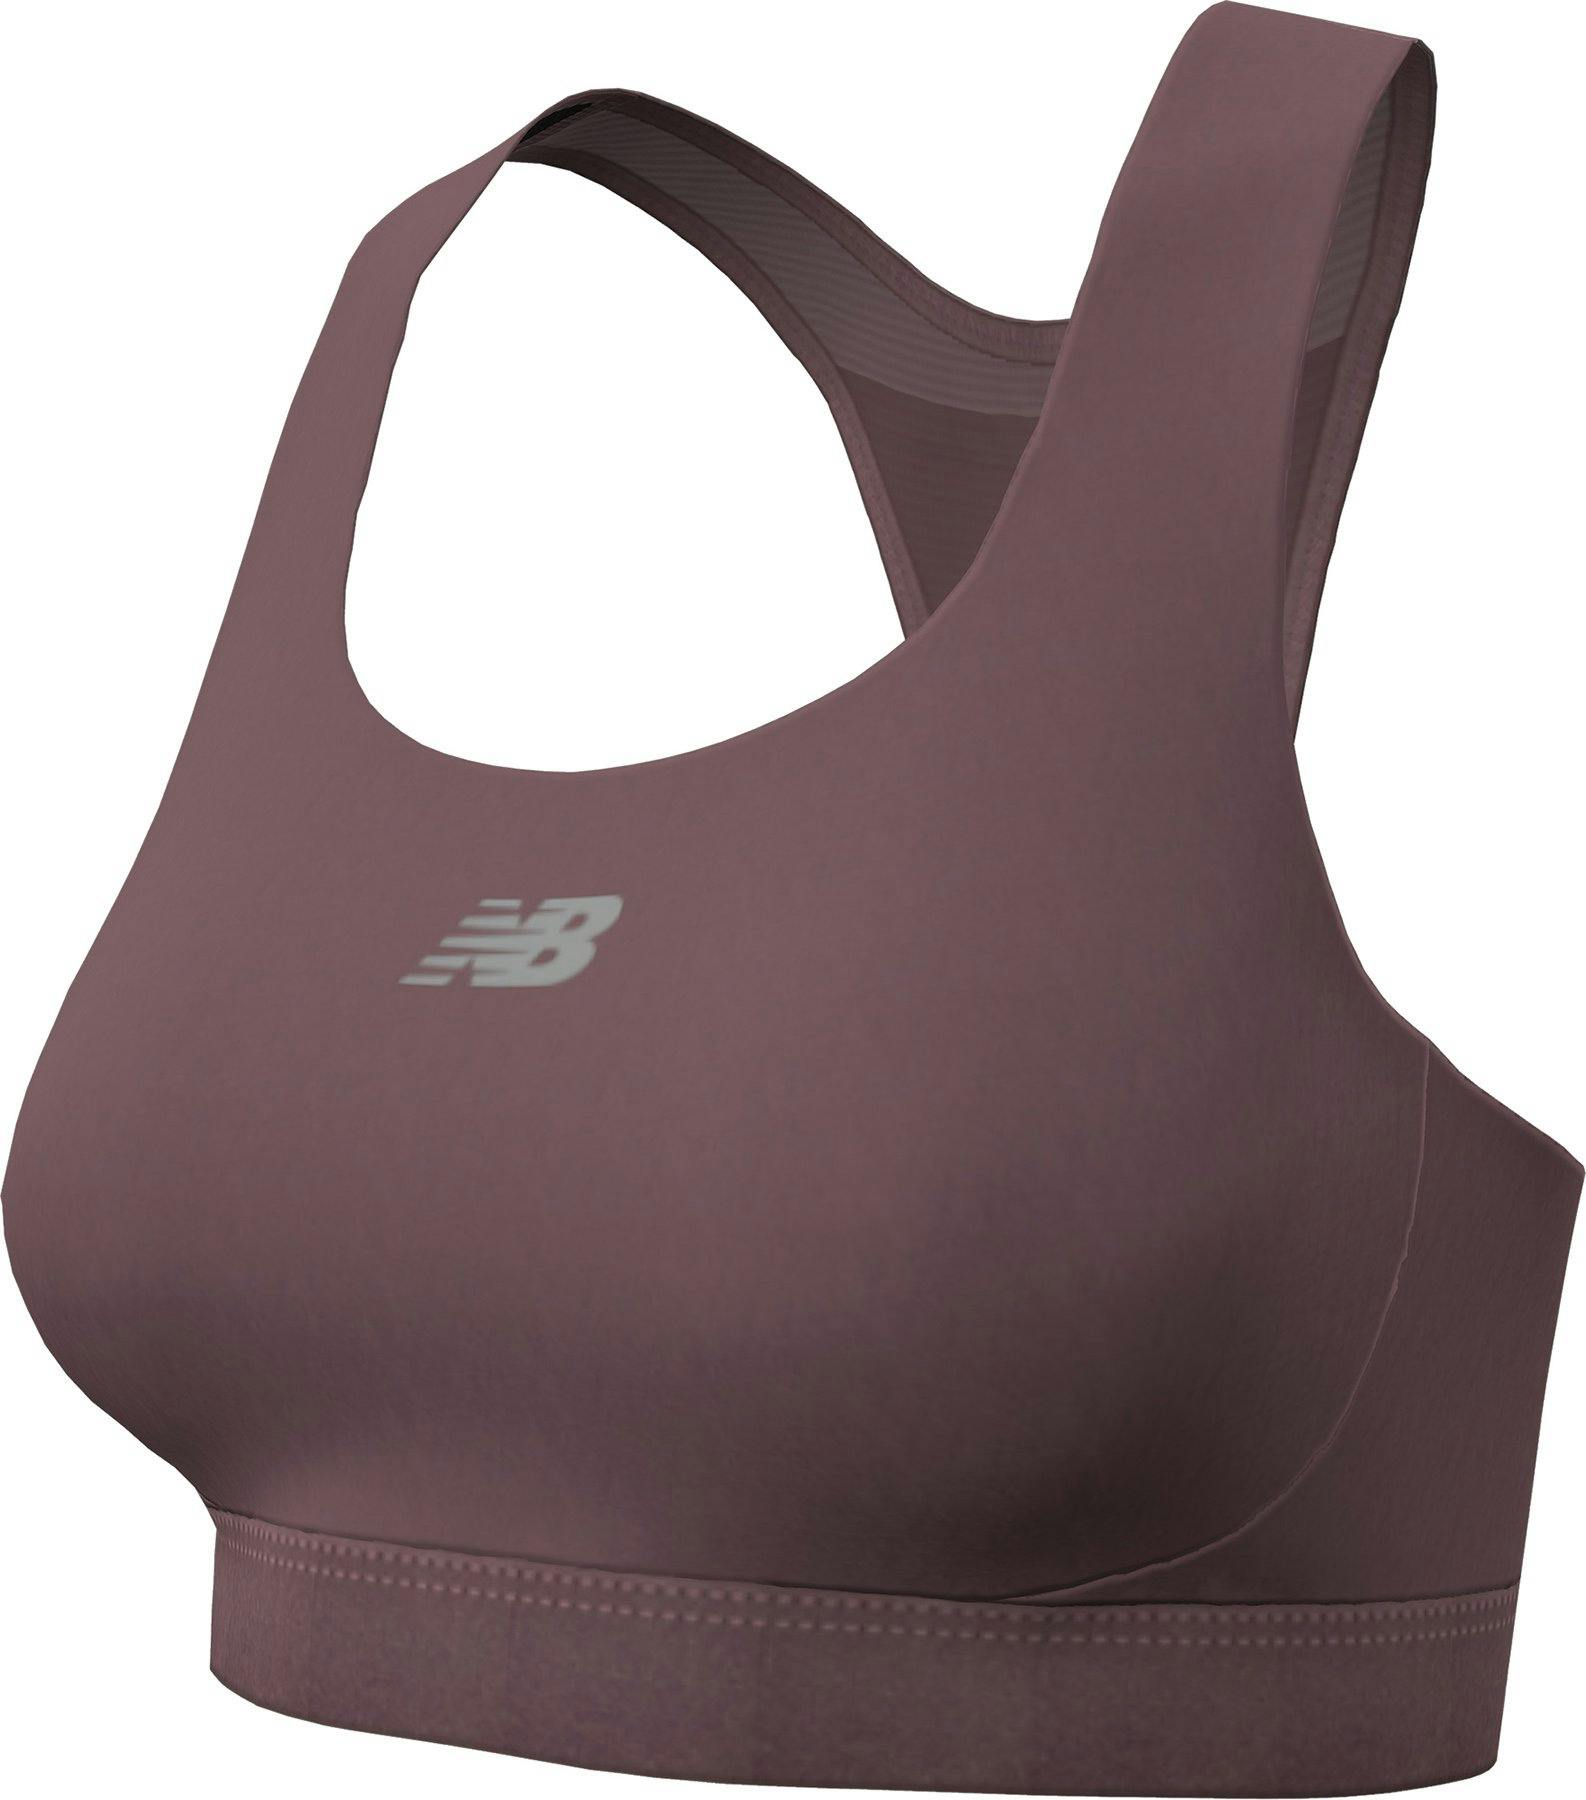 Product image for Sleek Medium Support Pocket Sports Bra - Women's